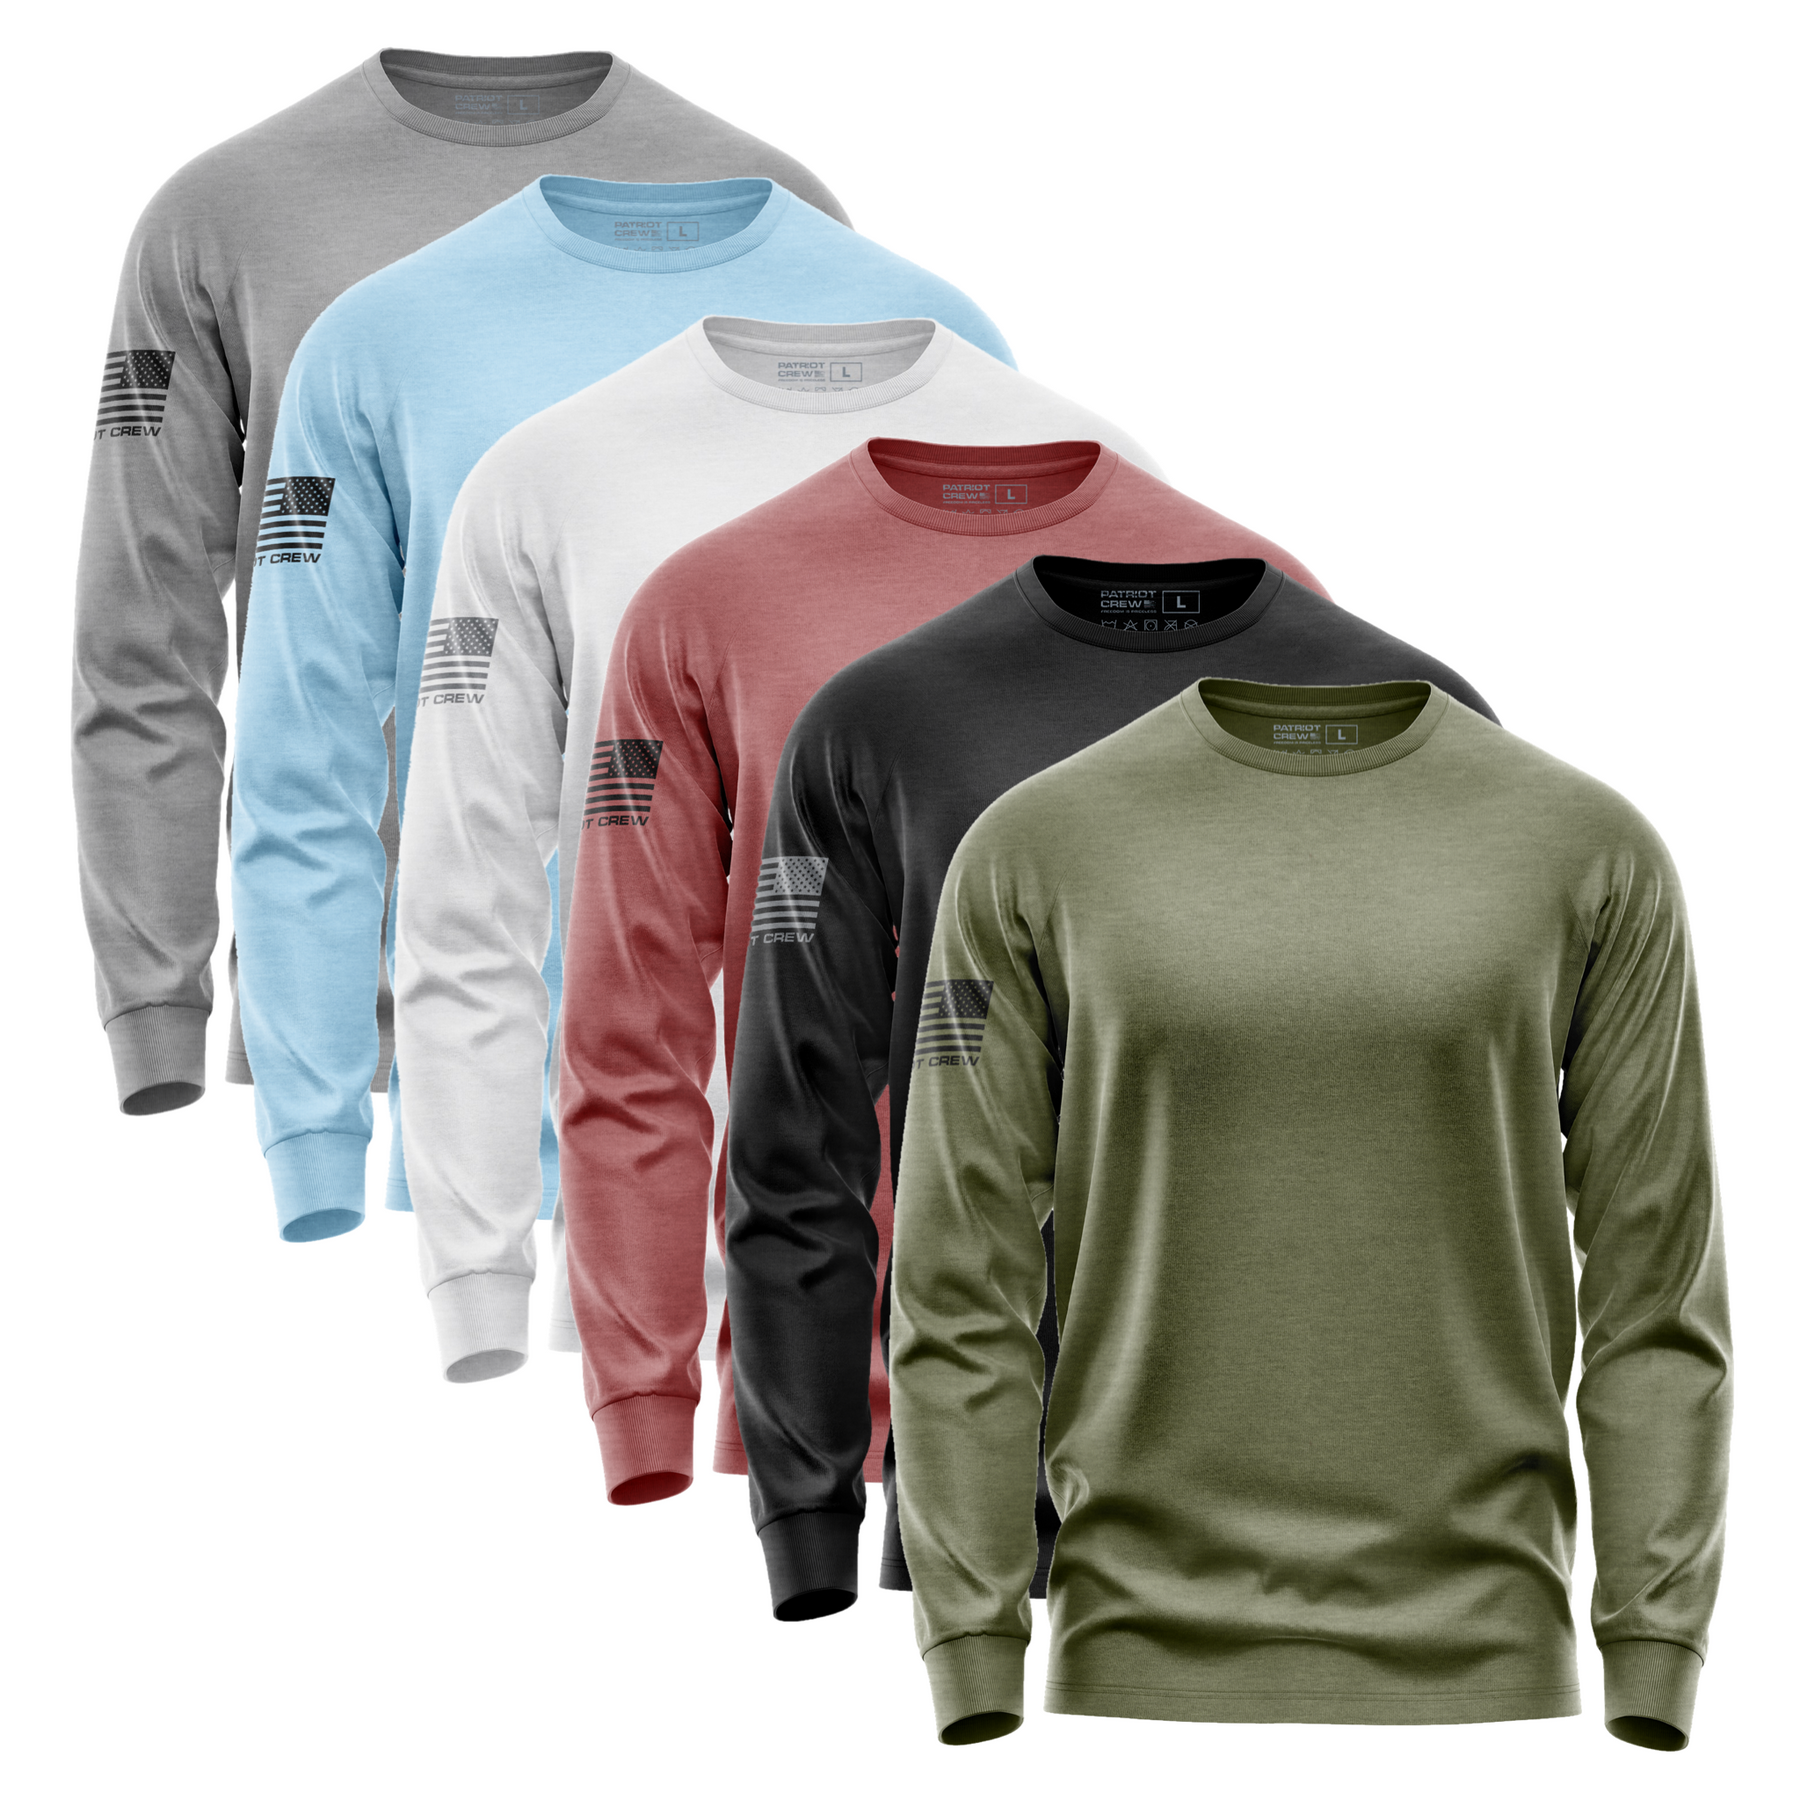 Variety Long-Sleeve T-Shirt (6 Pack)